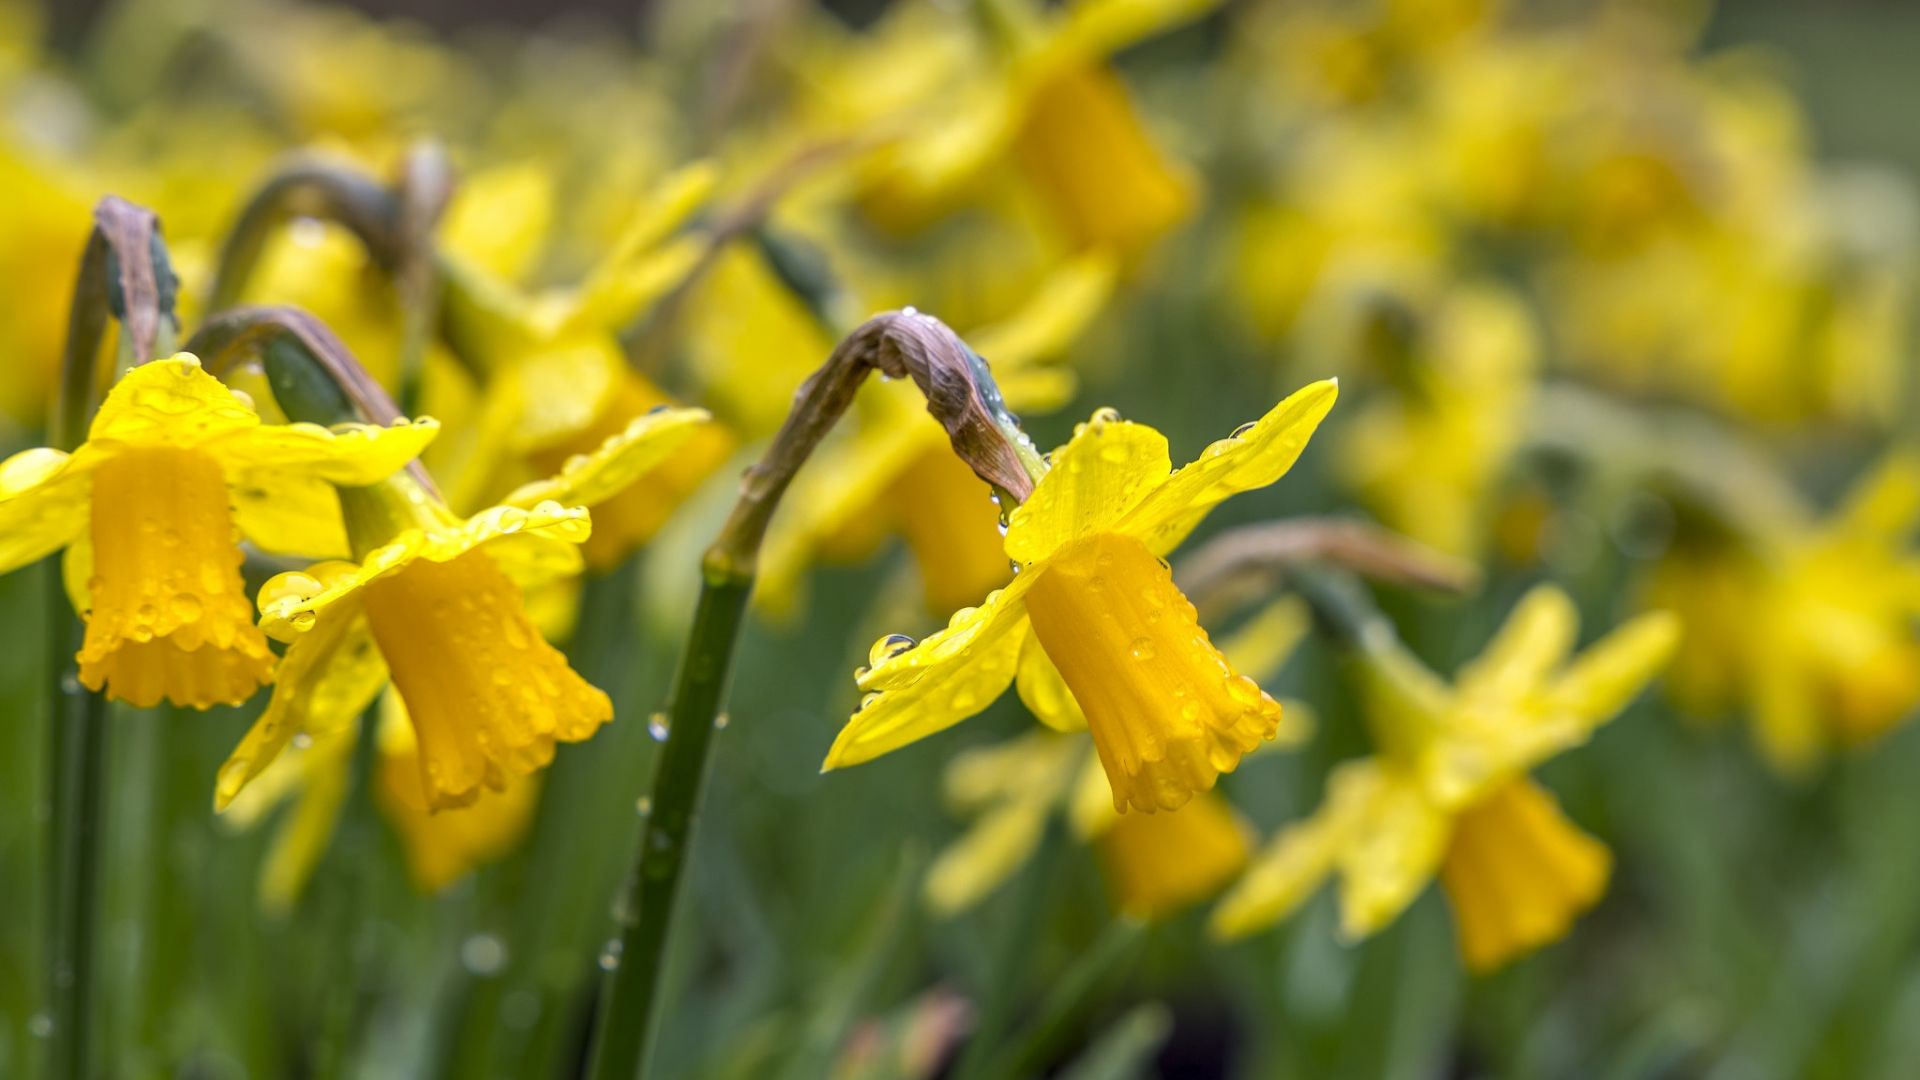 Wallpaper Drops, dew, Daffodil yellow flower, spring